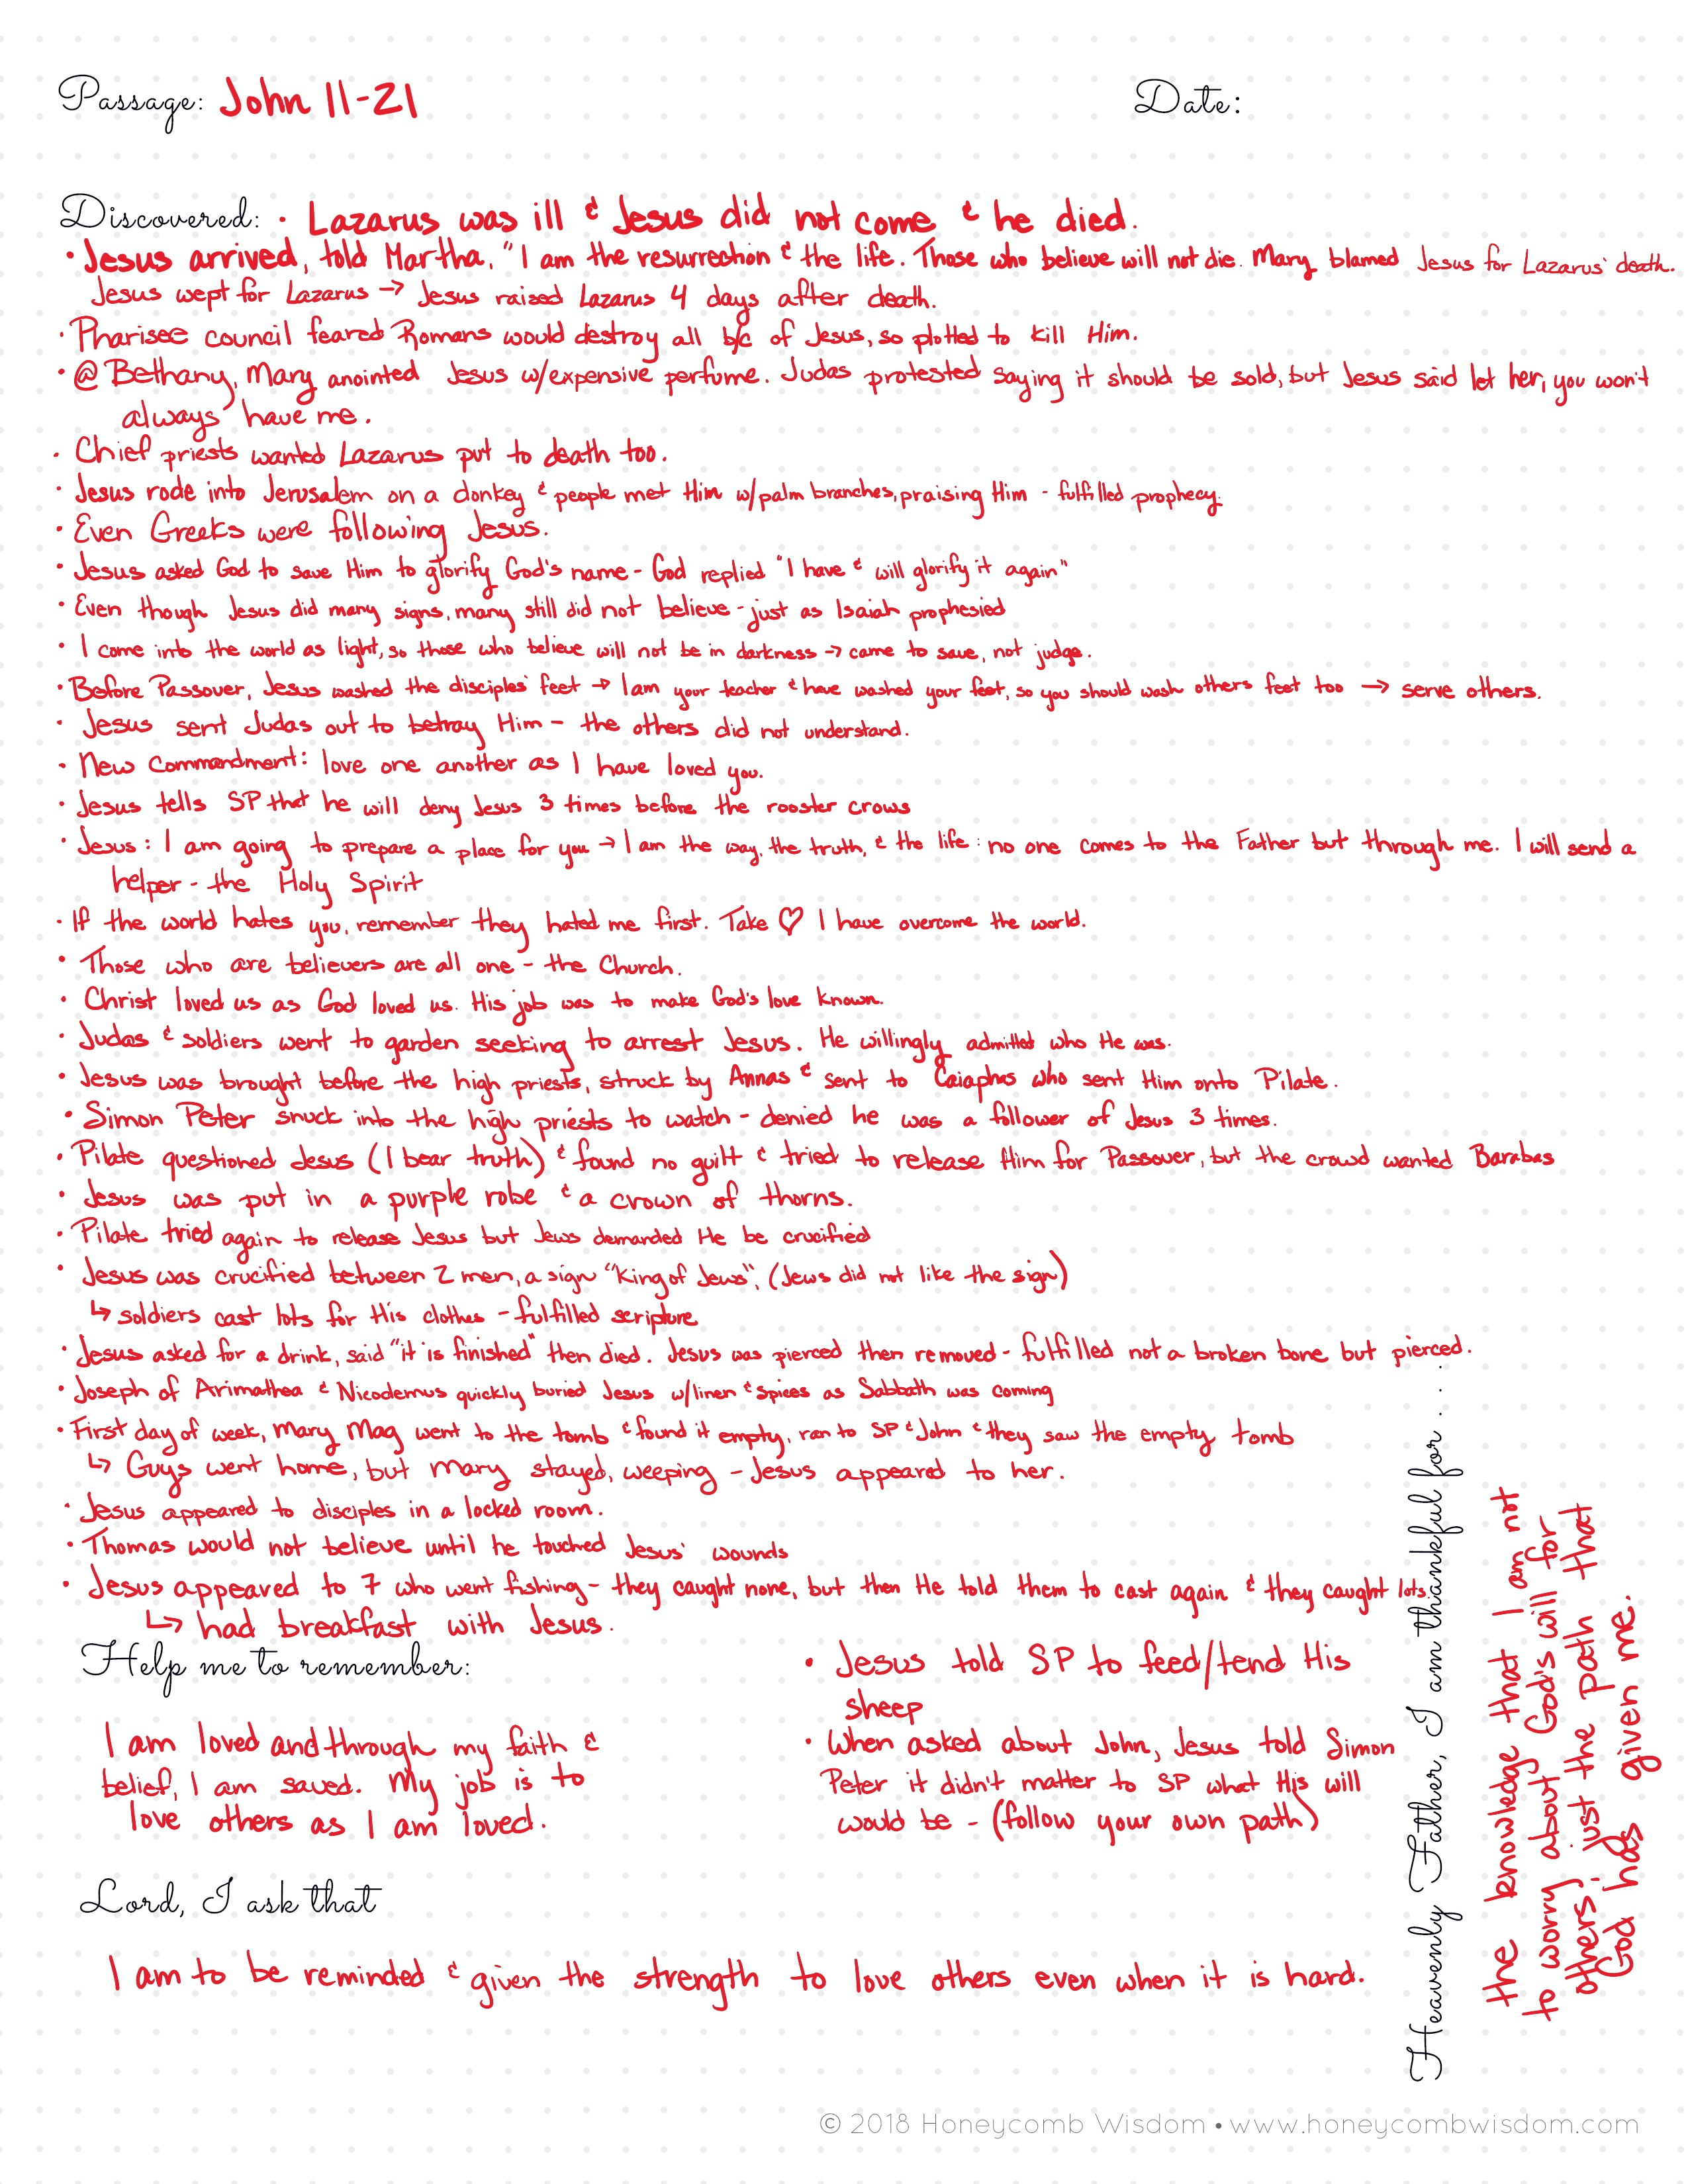 Handwritten copy of John 11-21 notes